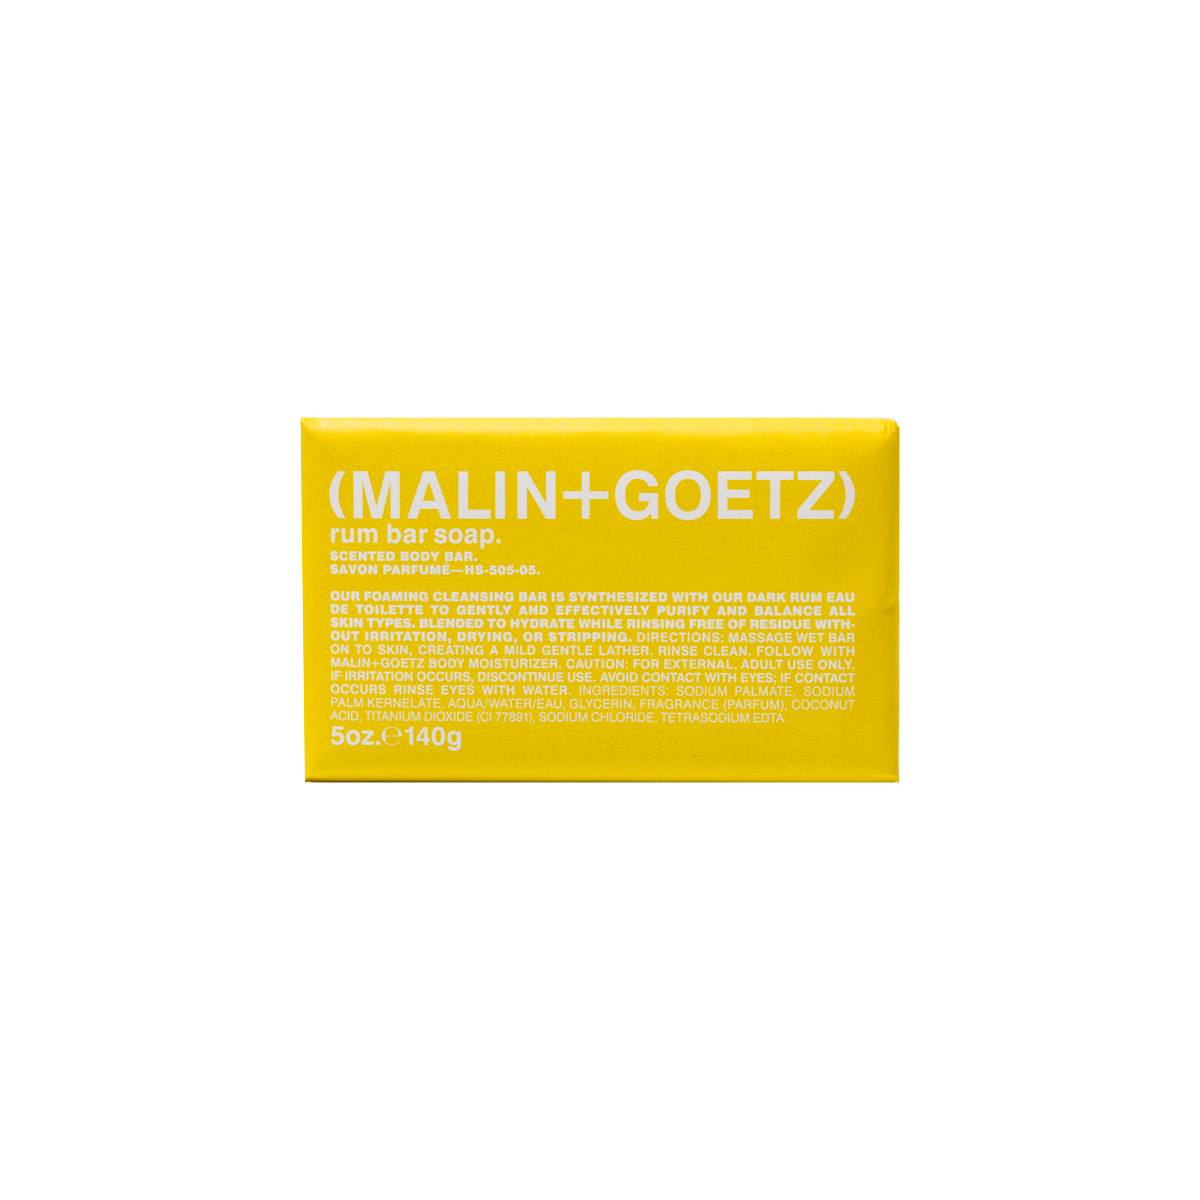 MALIN+GOETZ - Rum Bar Soap